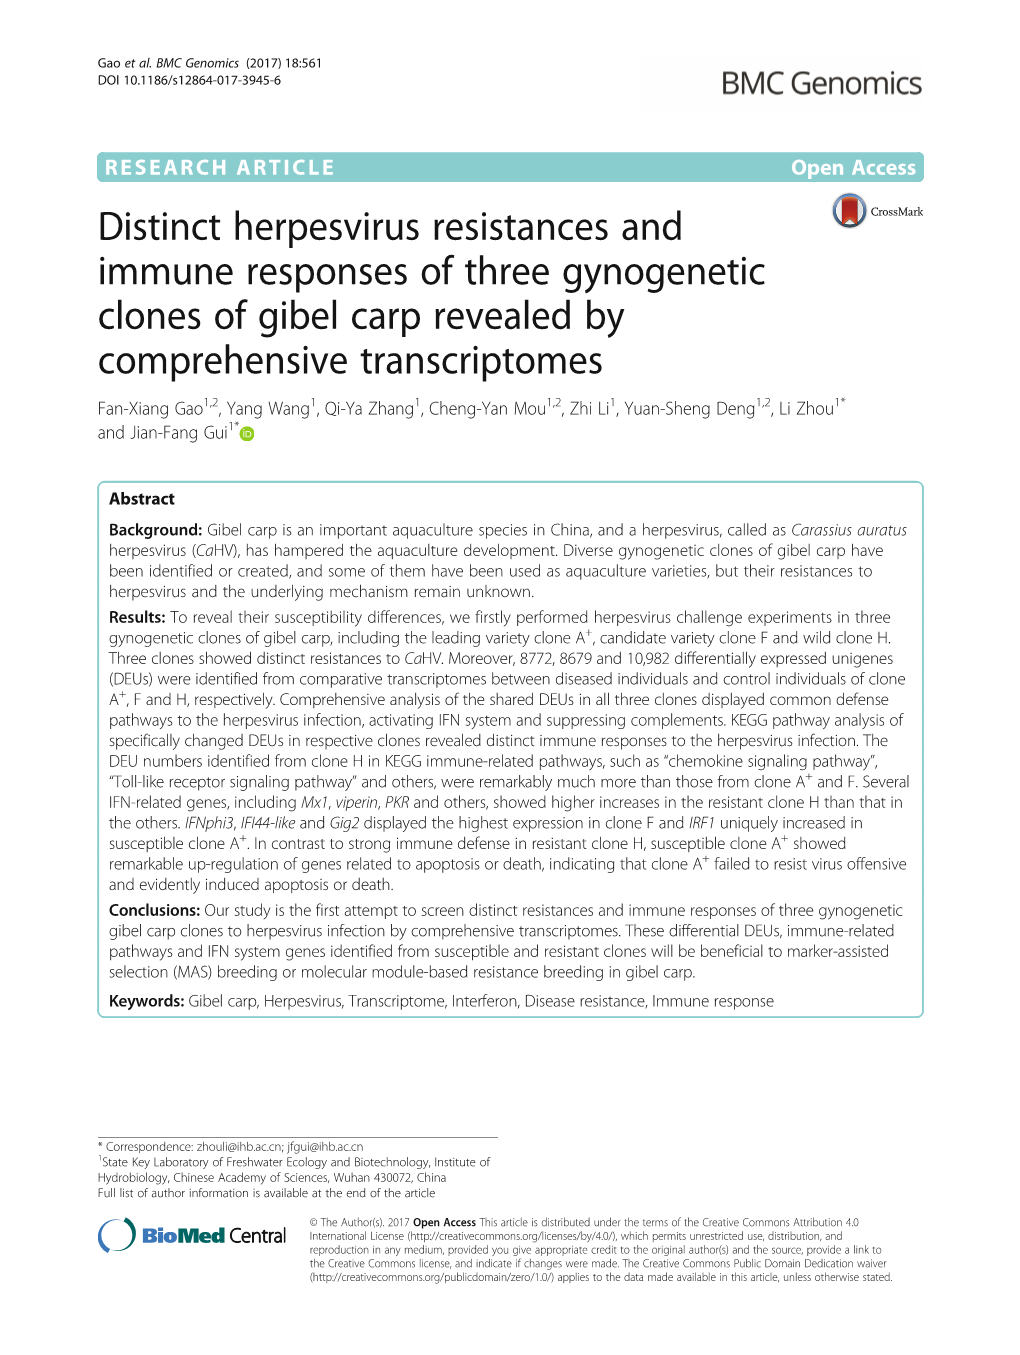 Distinct Herpesvirus Resistances and Immune Responses of Three